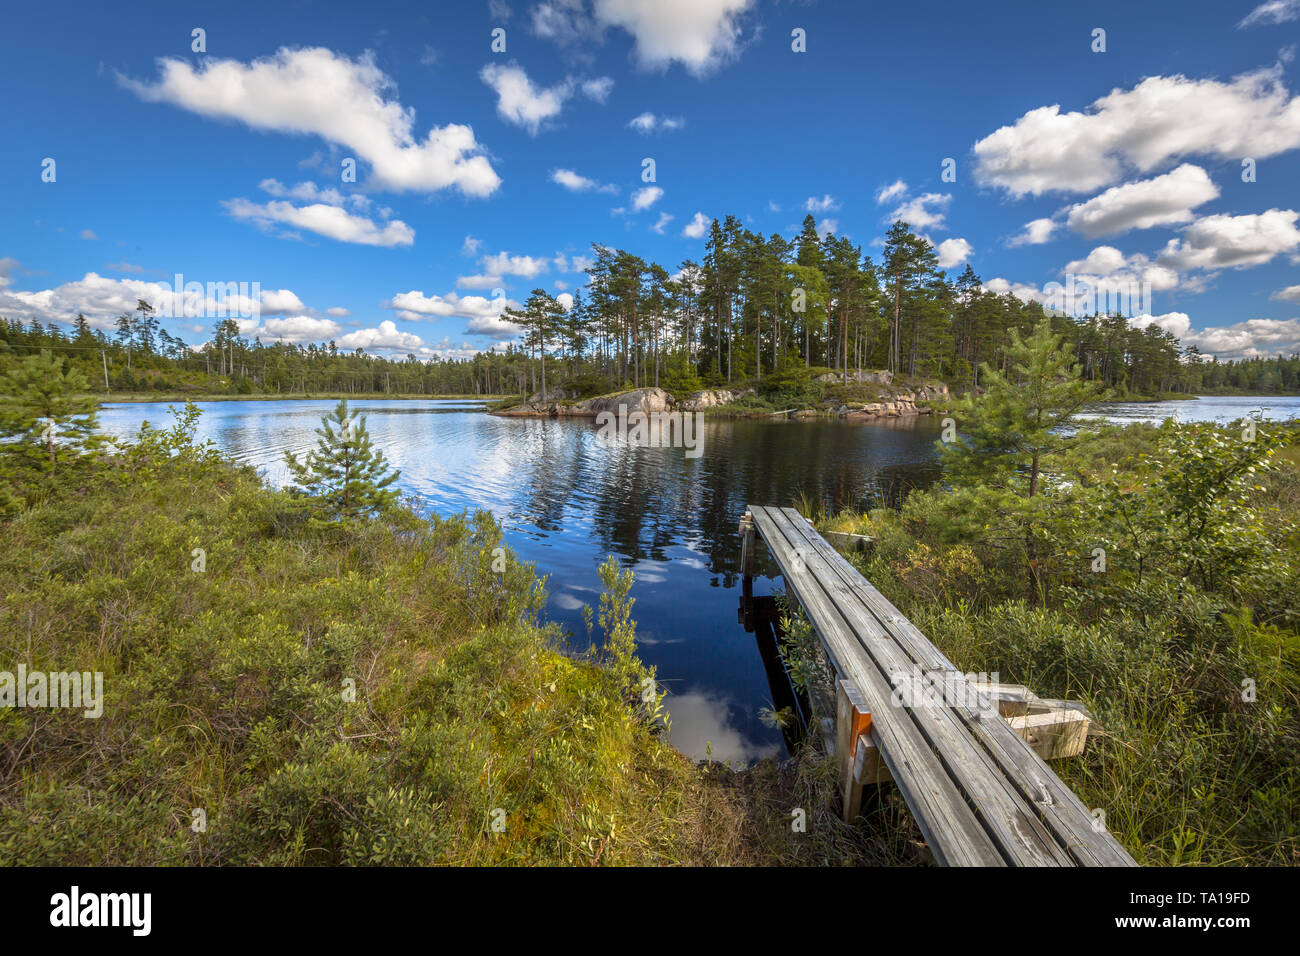 Lake with landing-stage in Glaskogen nature reserve Sweden Stock Photo